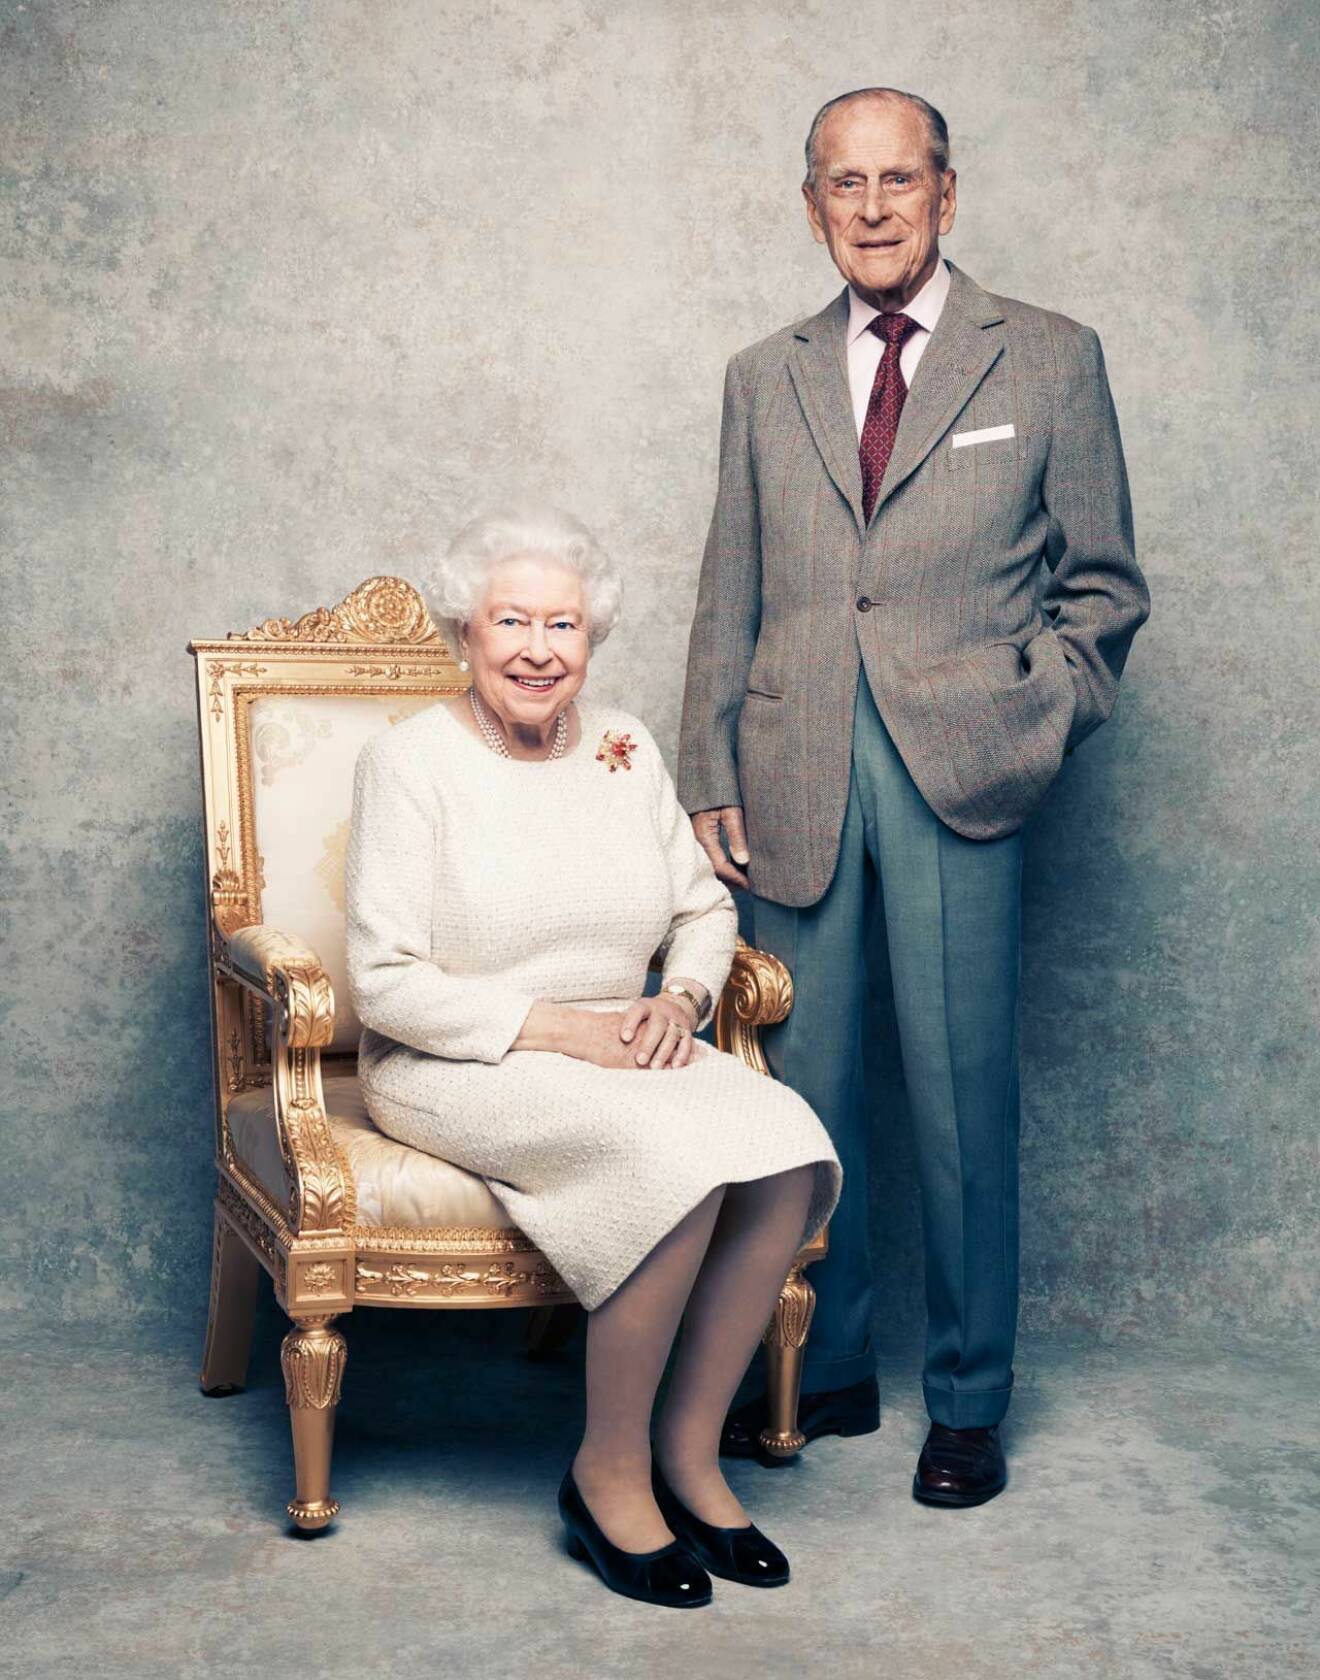 De har varit gifta sedan 1947.